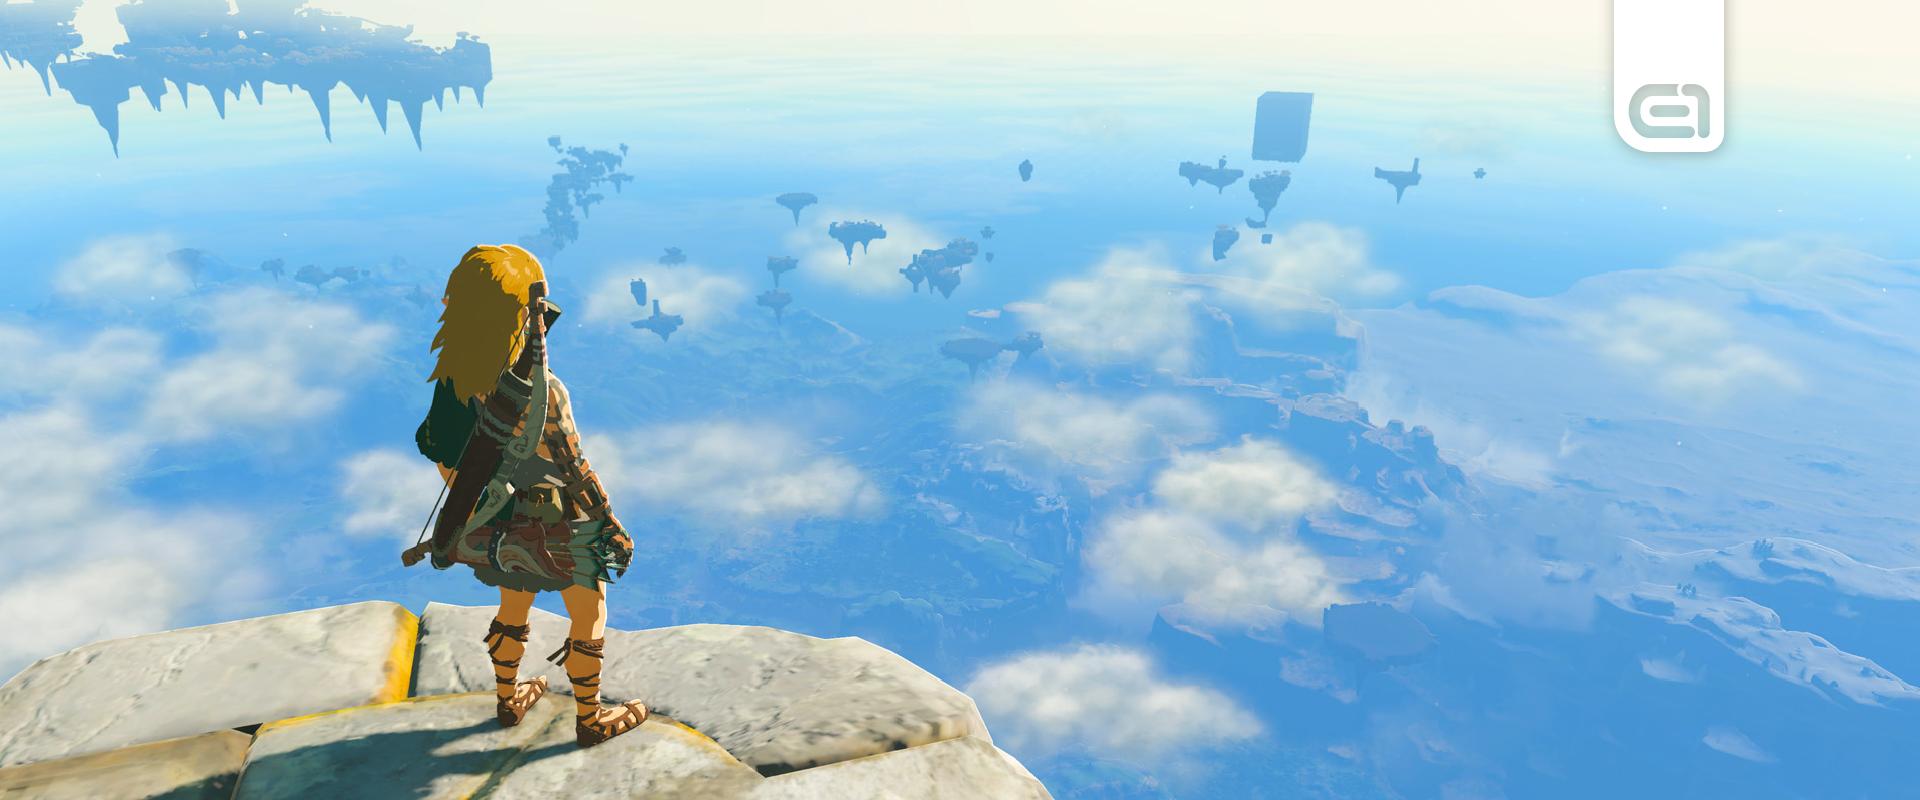 Itt a The Legend of Zelda: Tears of the Kingdom első gameplay videója!